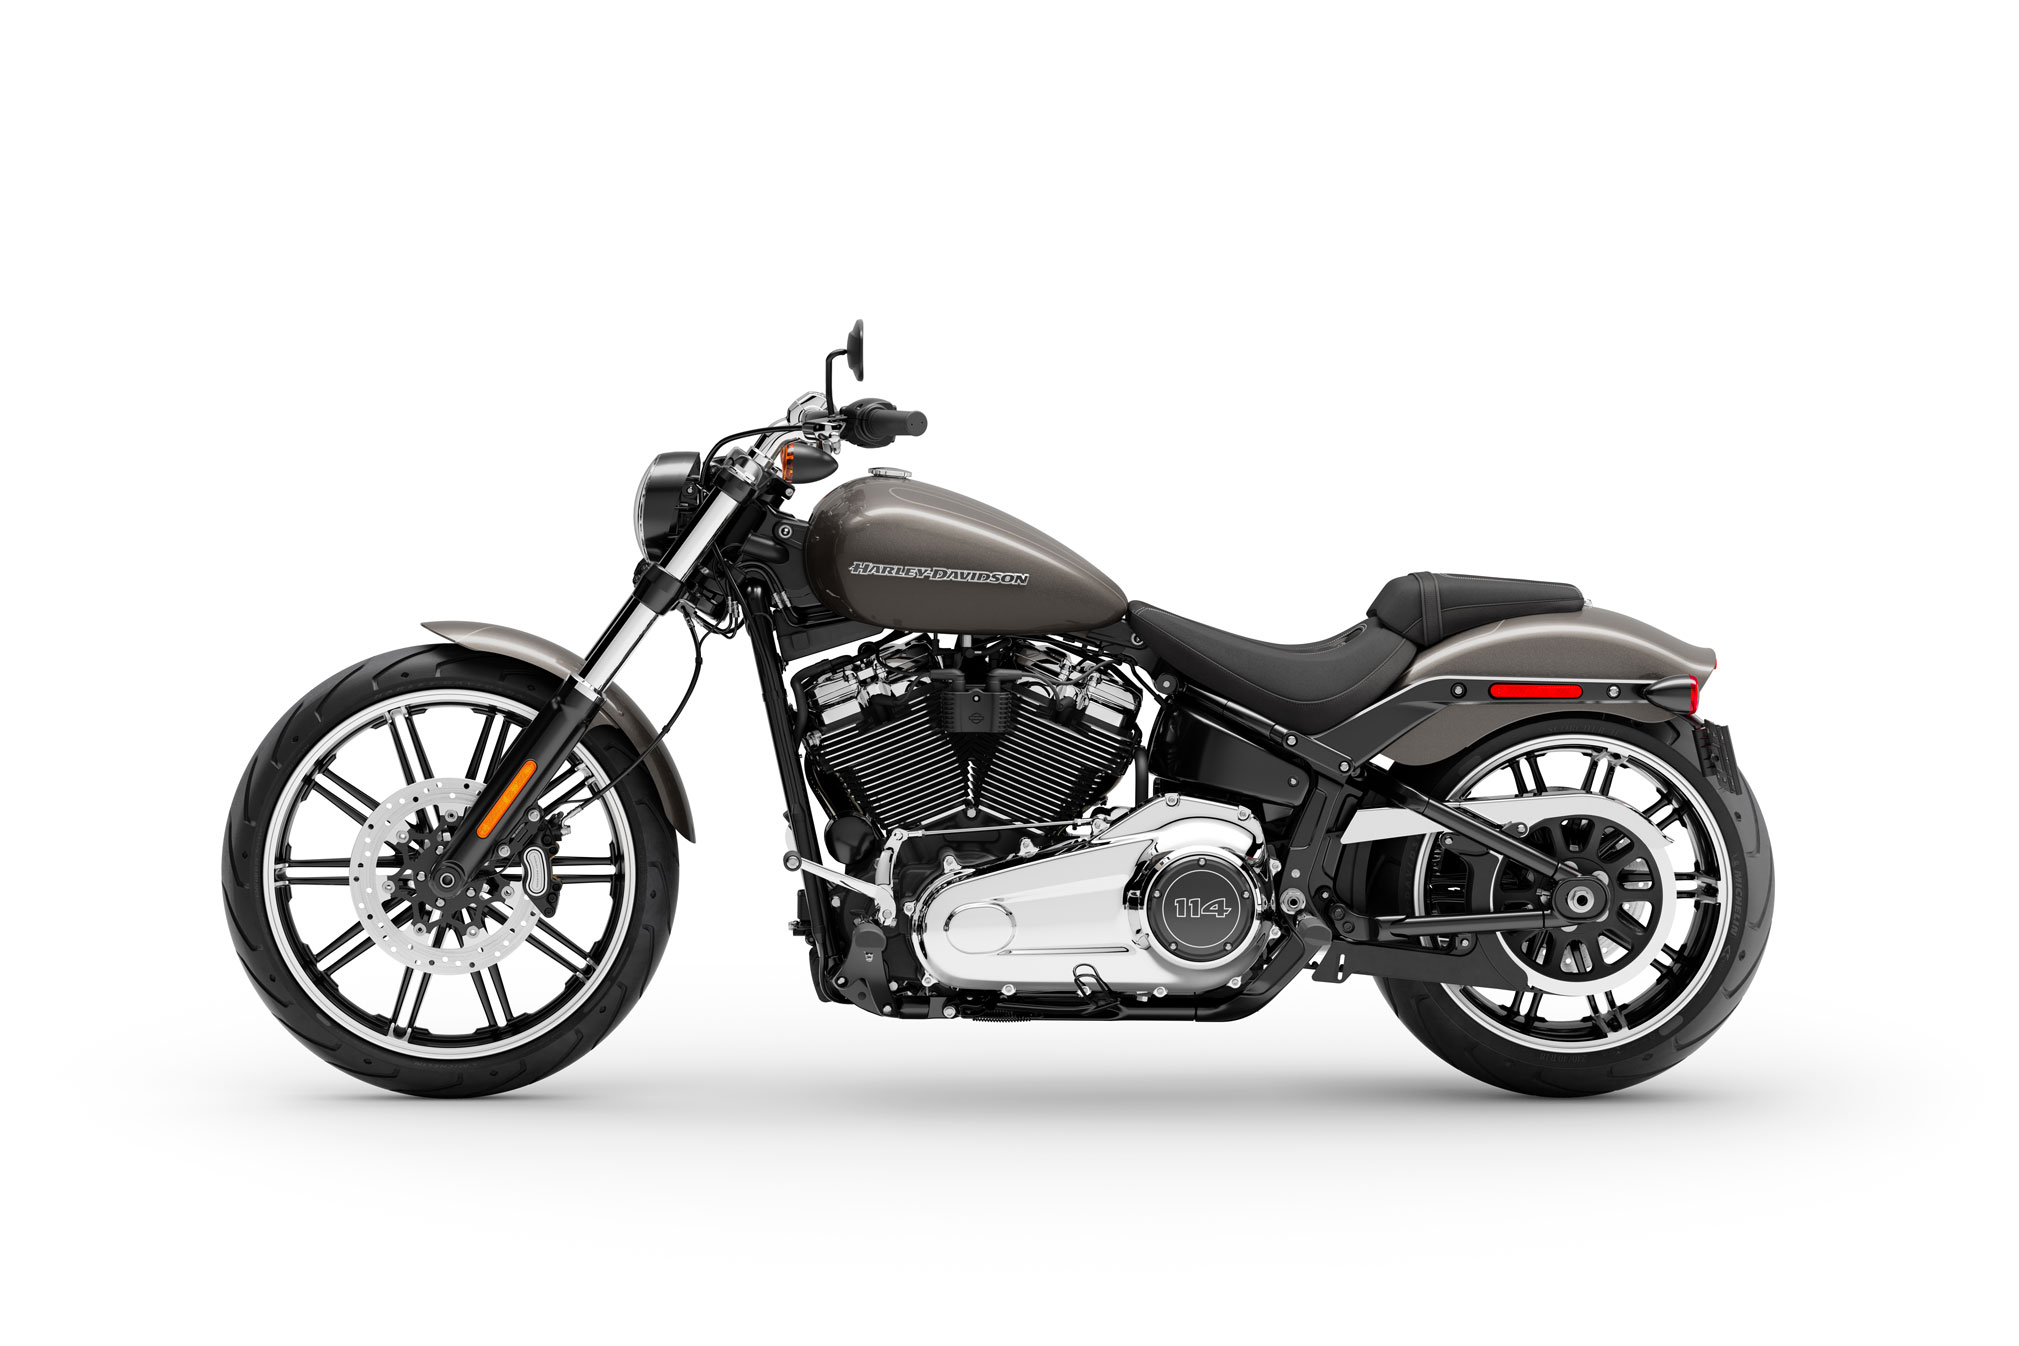 Breakout Harley Davidson 2019 Promotions